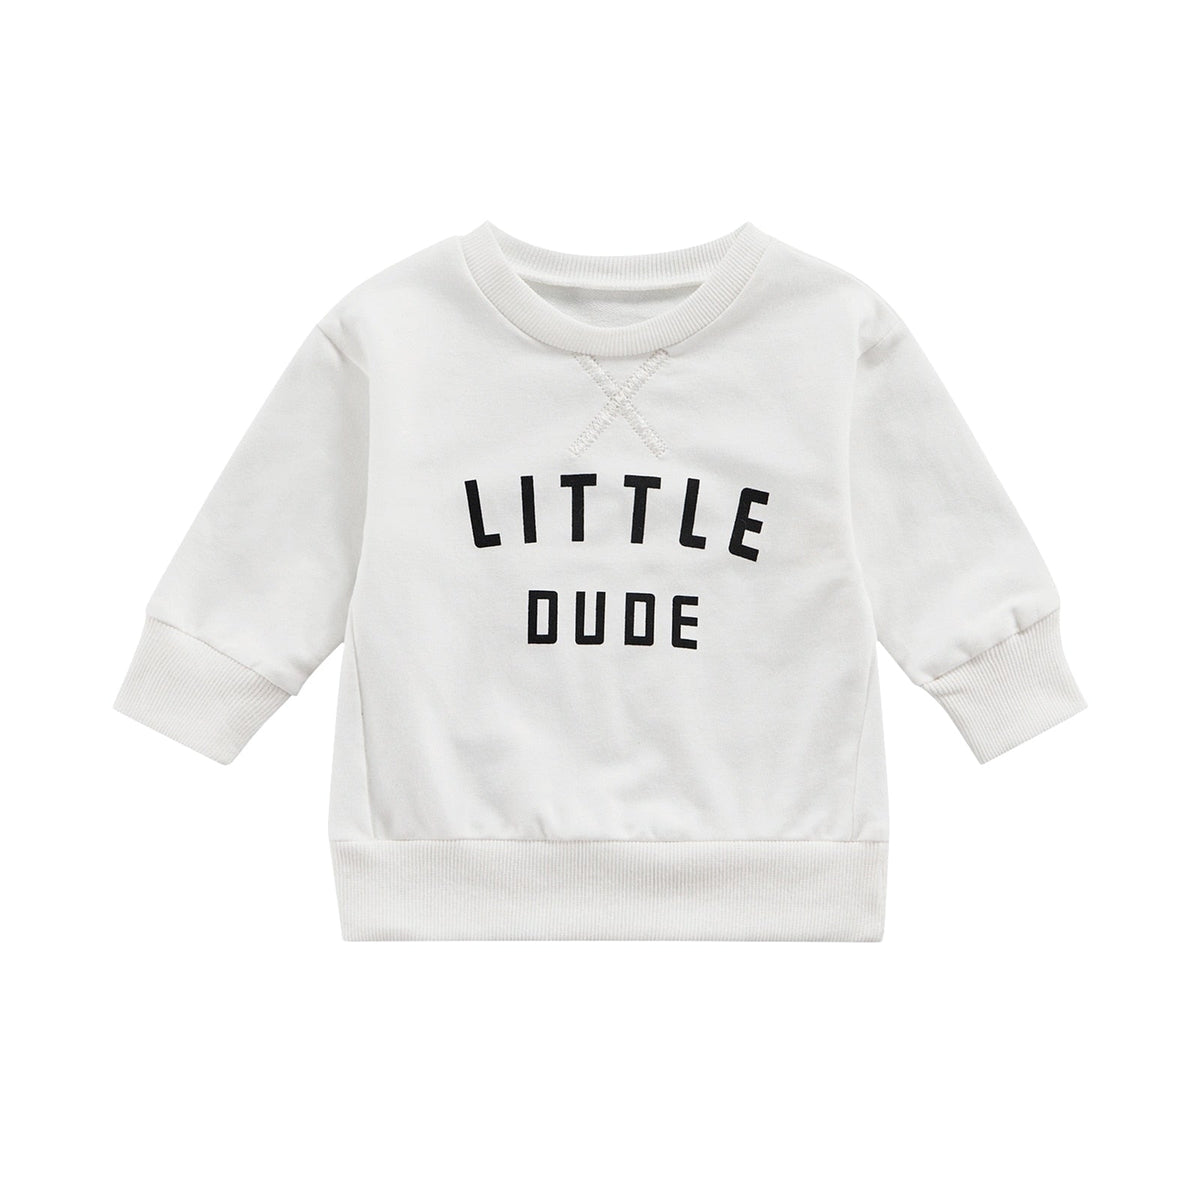 Little Dude Girls' Long-Sleeved Sweatshirt